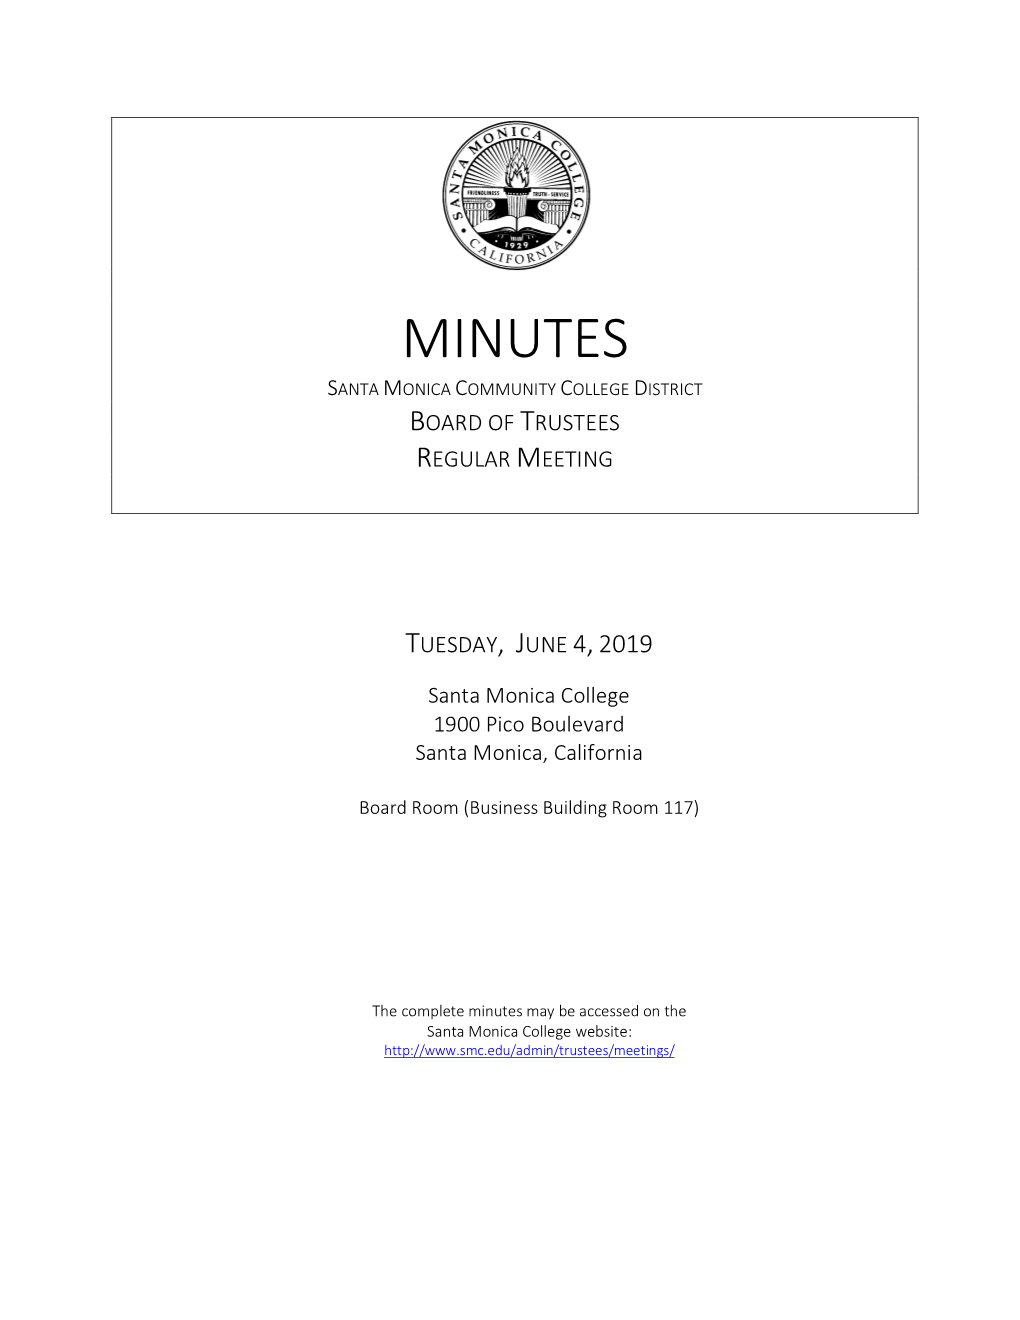 Minutes Santa Monica Community College District Board of Trustees Regular Meeting